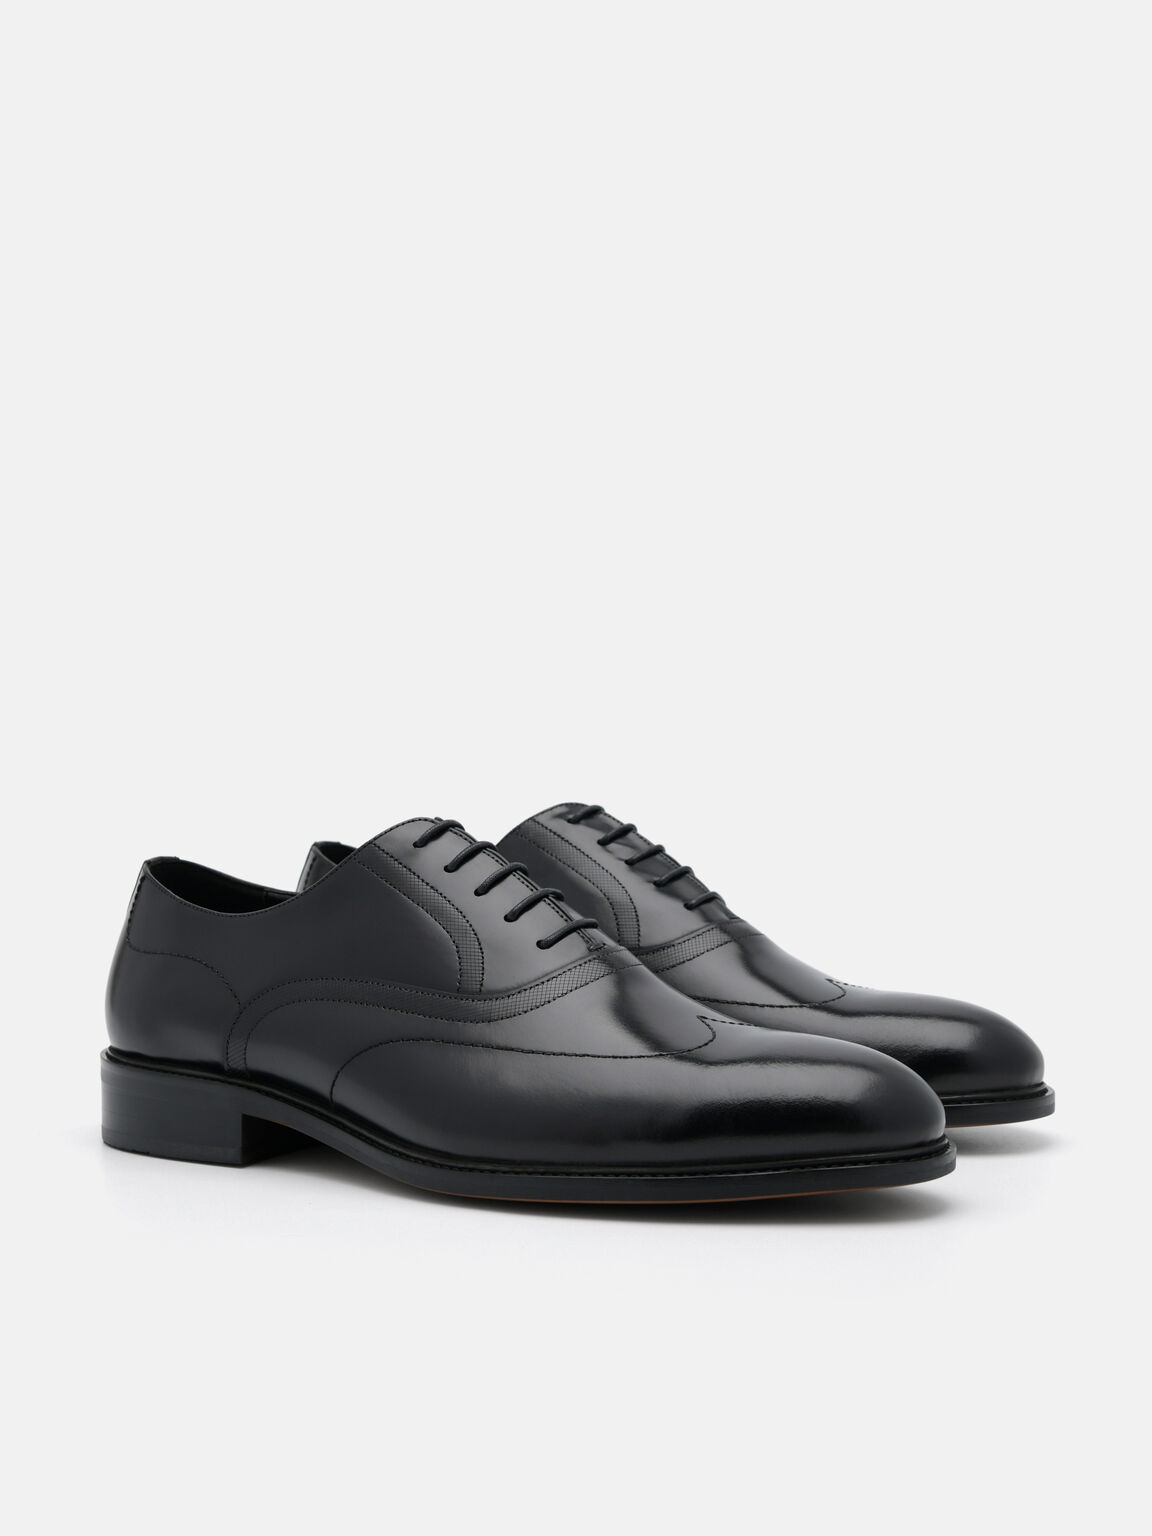 Black Leather Wingtip Oxford Shoes - PEDRO International